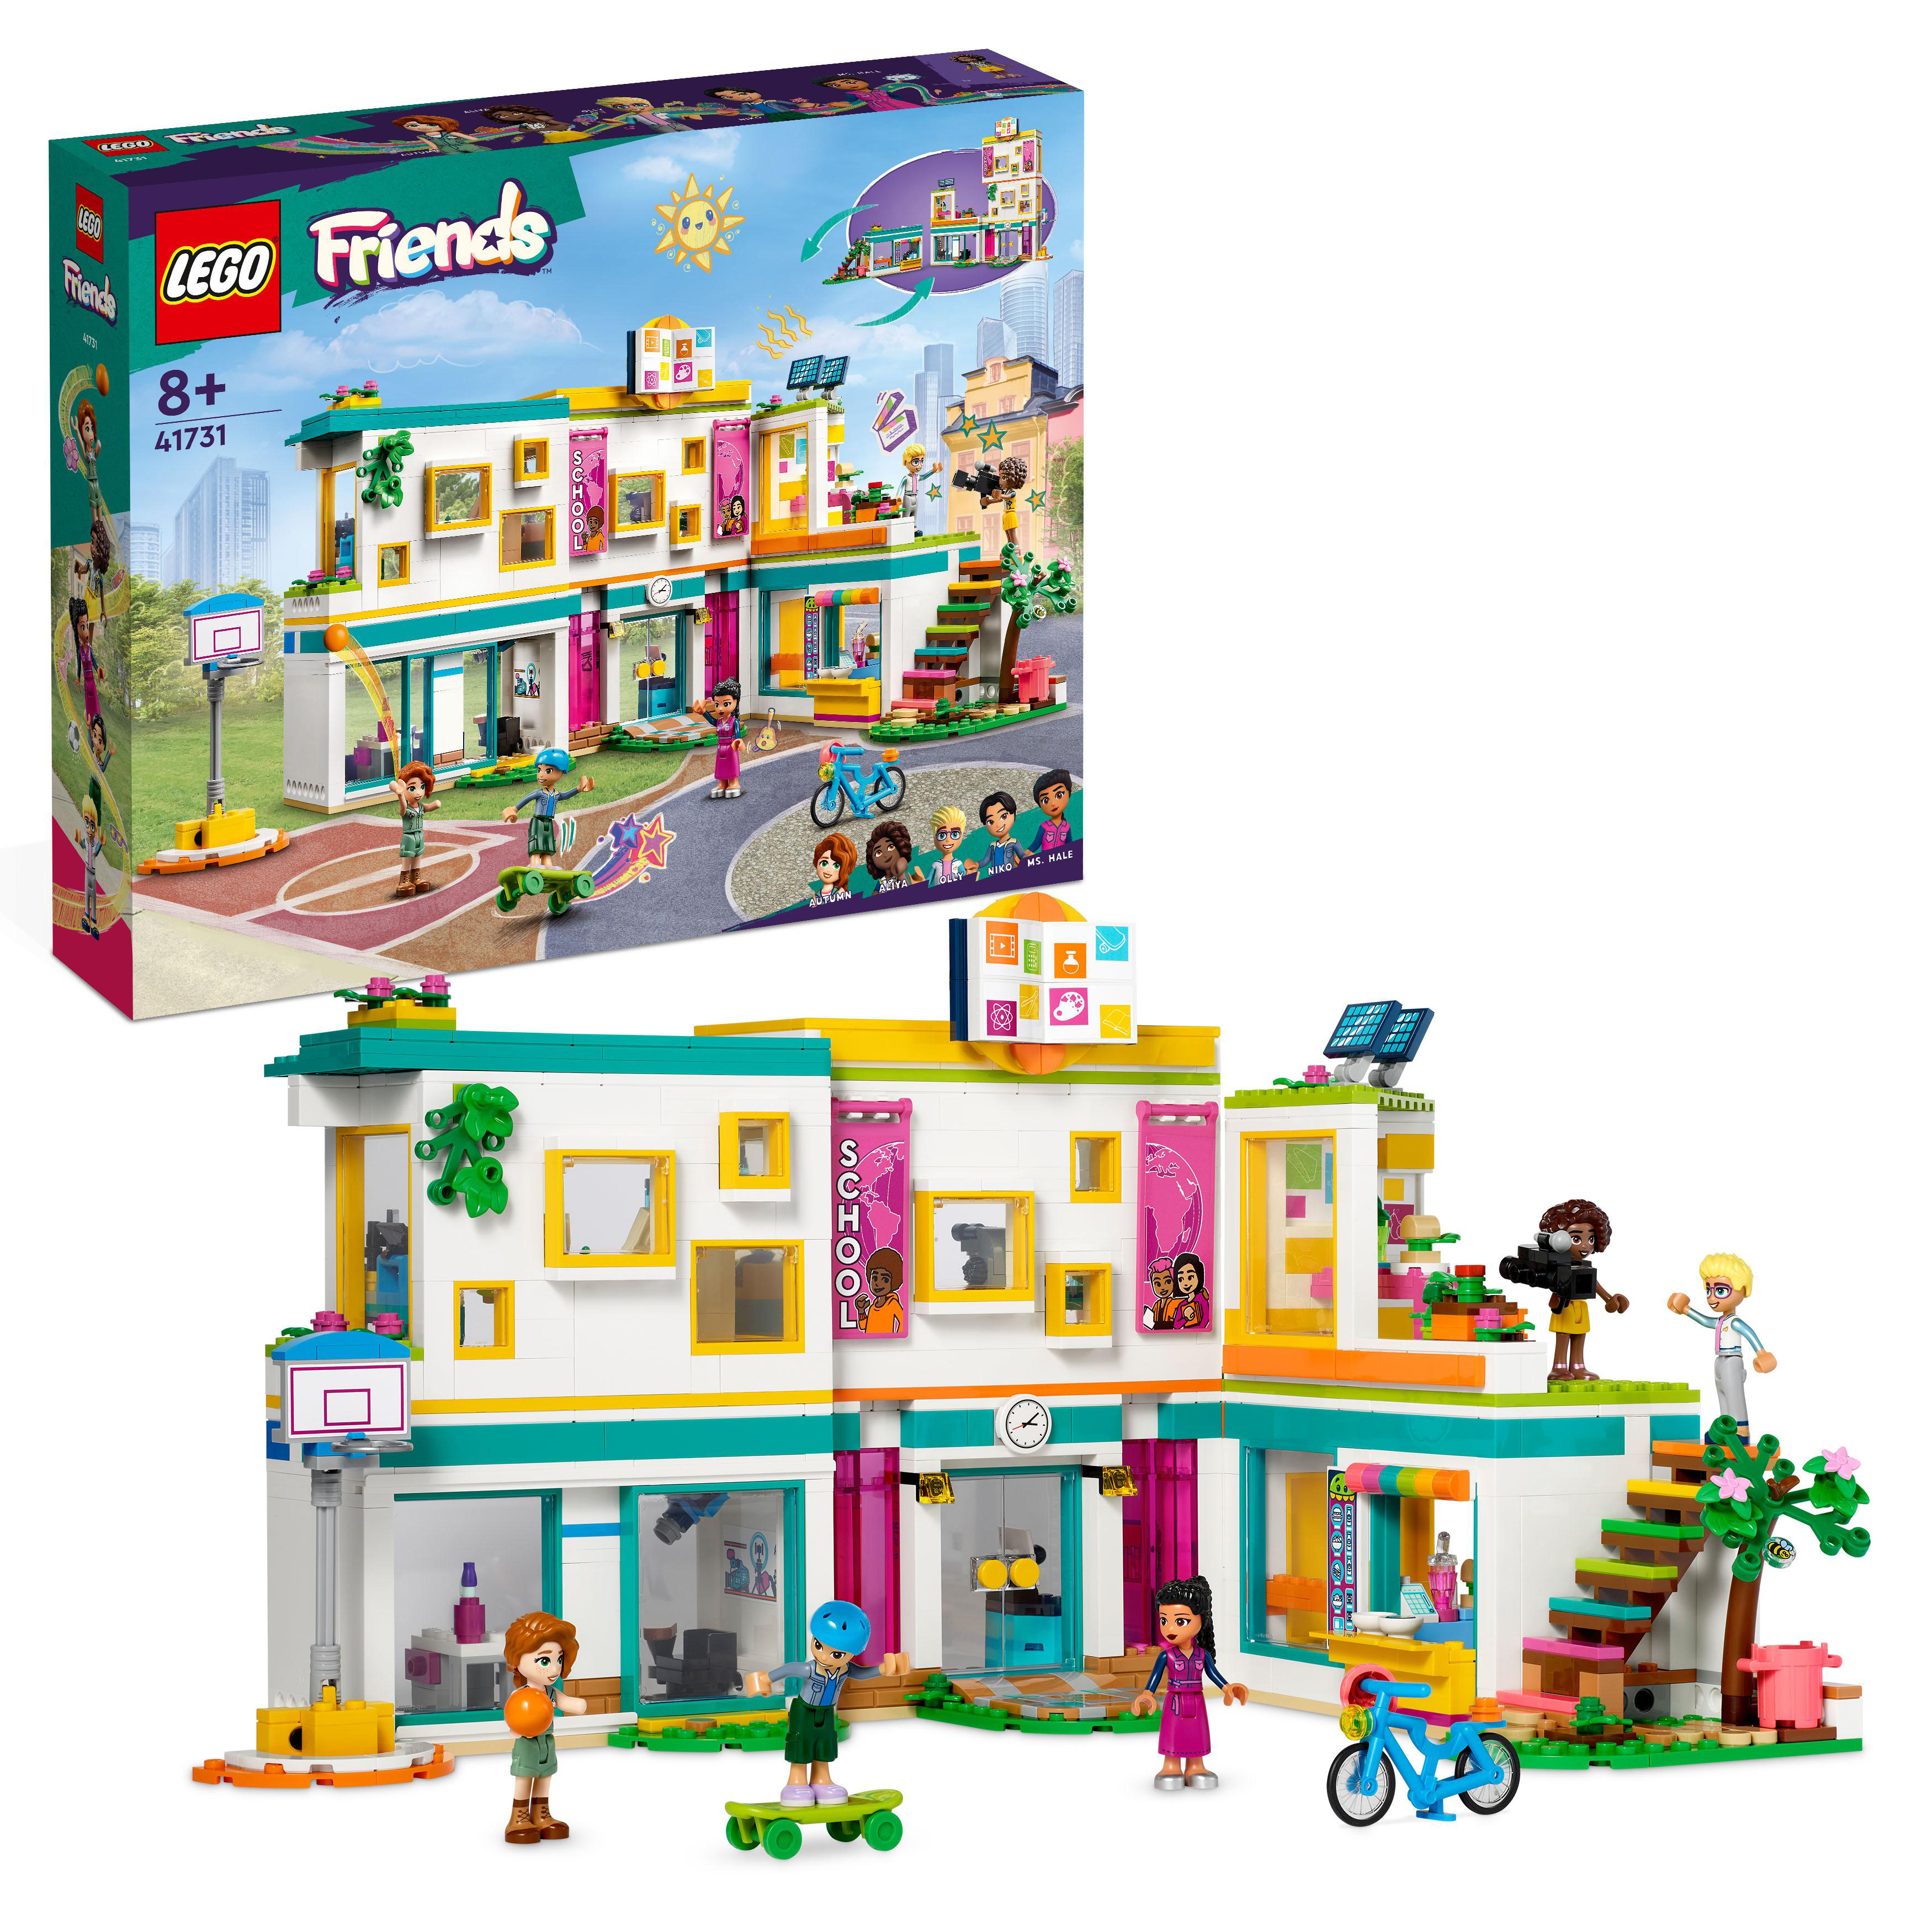 LEGO Friends 41731 Internationale Schule Mehrfarbig Bausatz